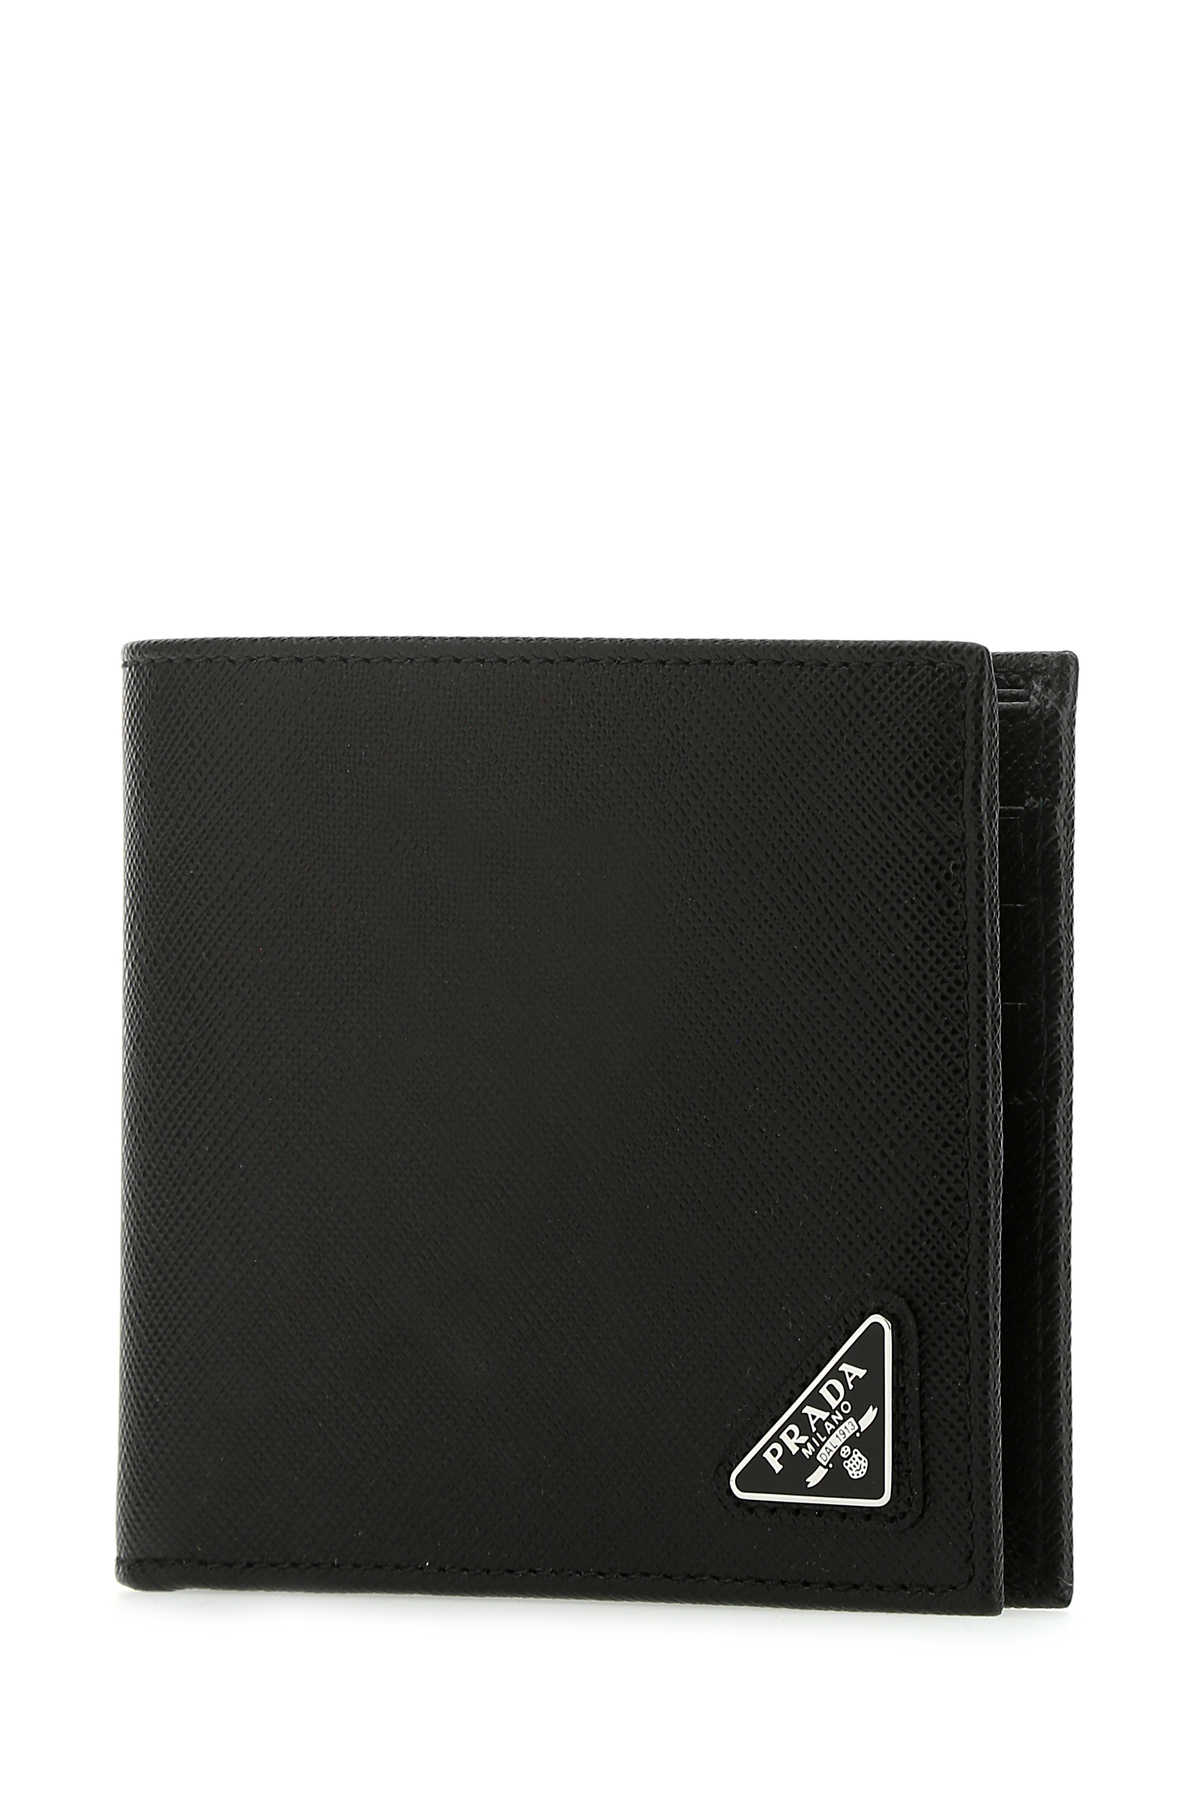 Shop Prada Black Leather Wallet In F0002